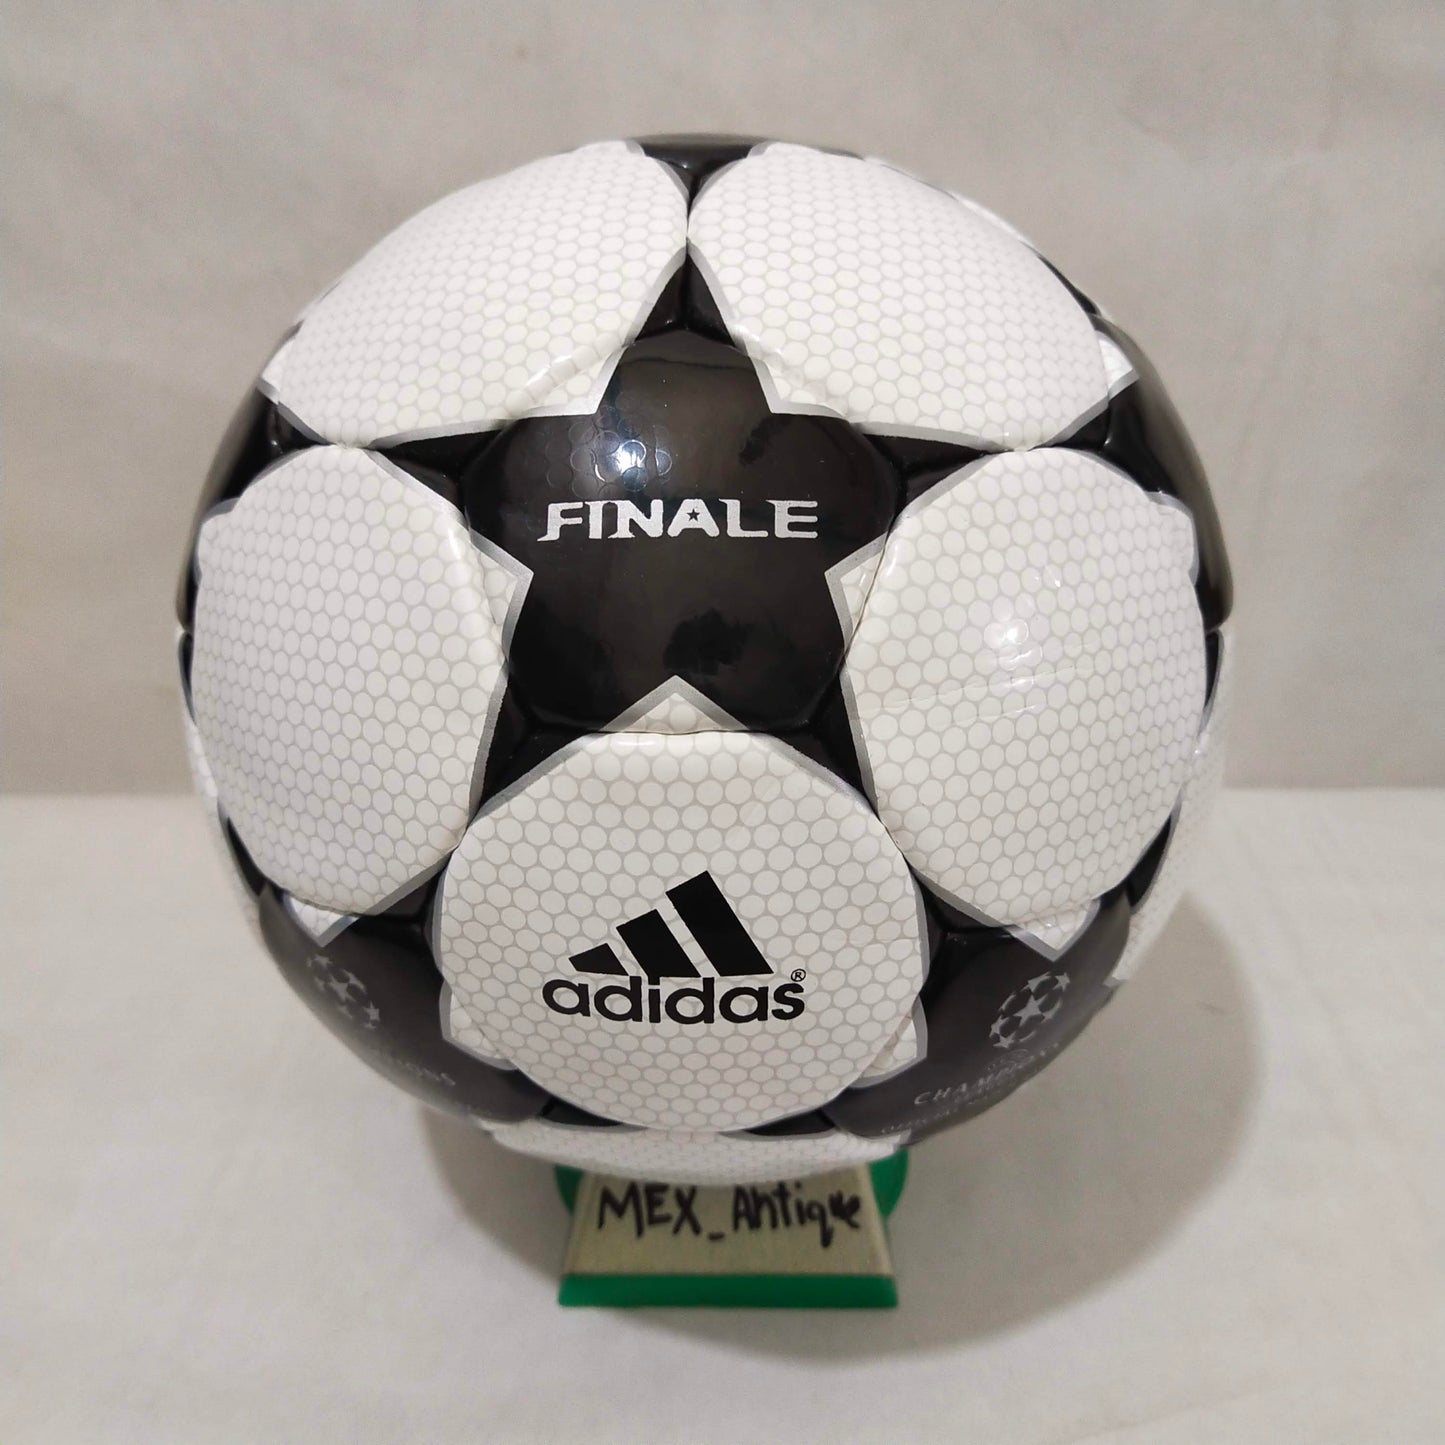 Adidas Finale 2 | 2002-2003 | UEFA Champions League Ball | Size 5 01